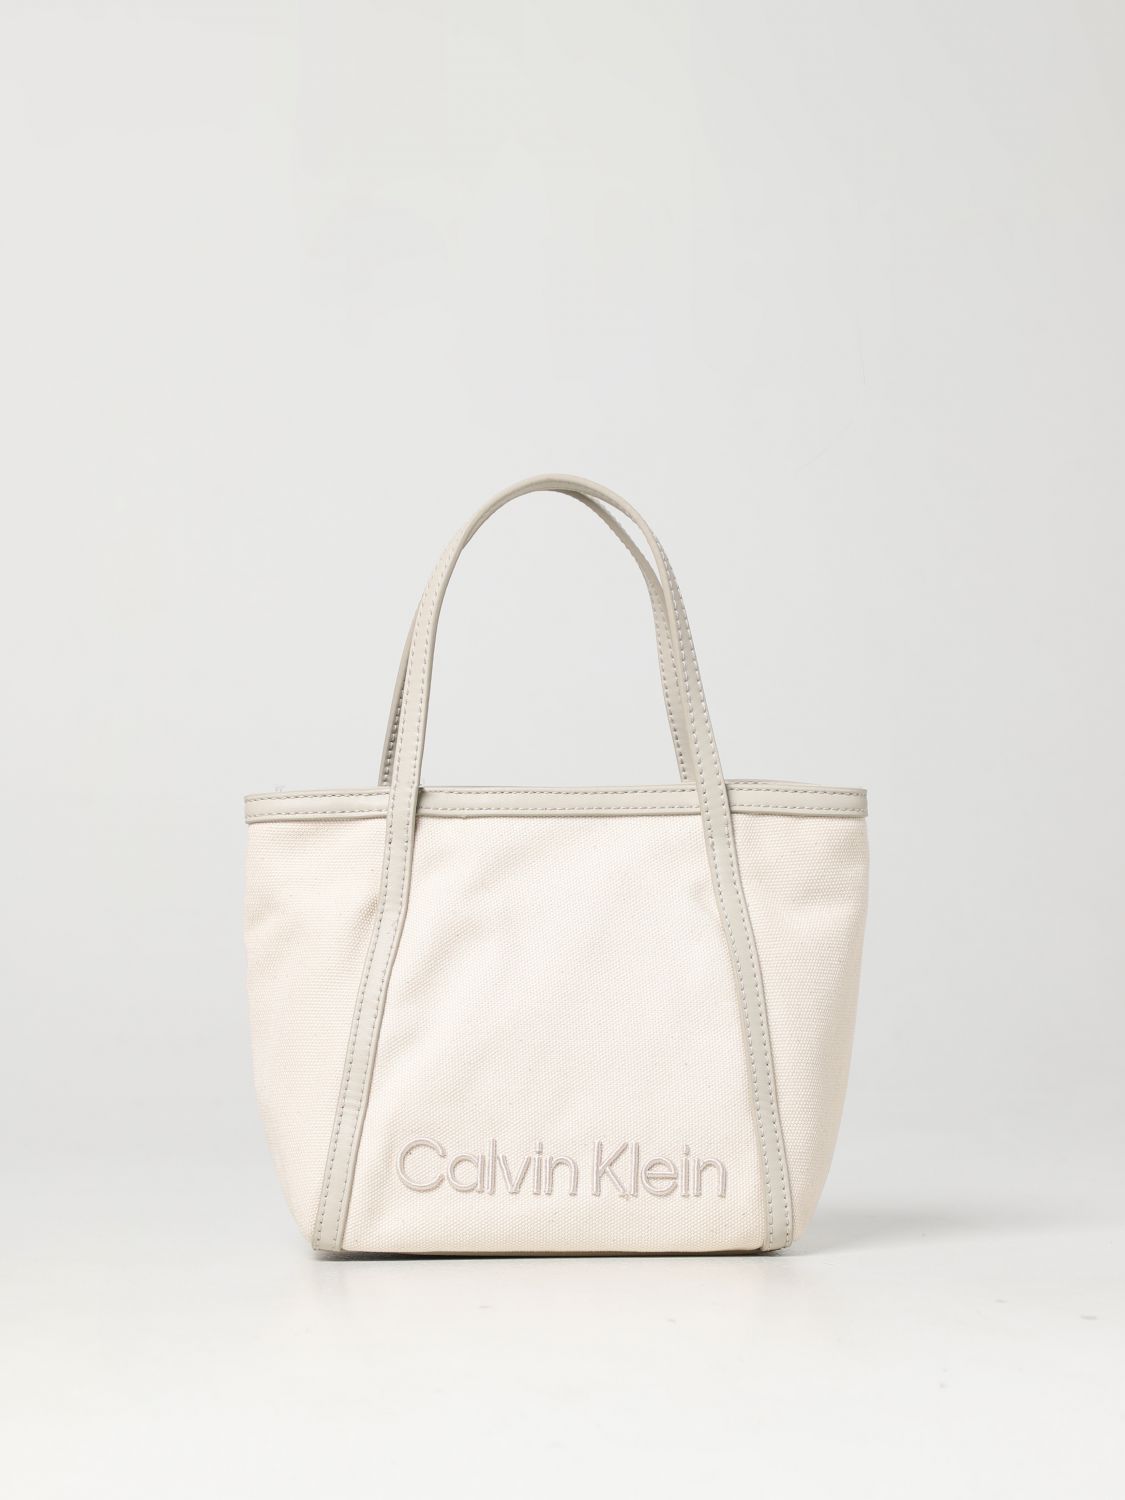 CALVIN KLEIN JEANS: shoulder bag for woman - Yellow Cream